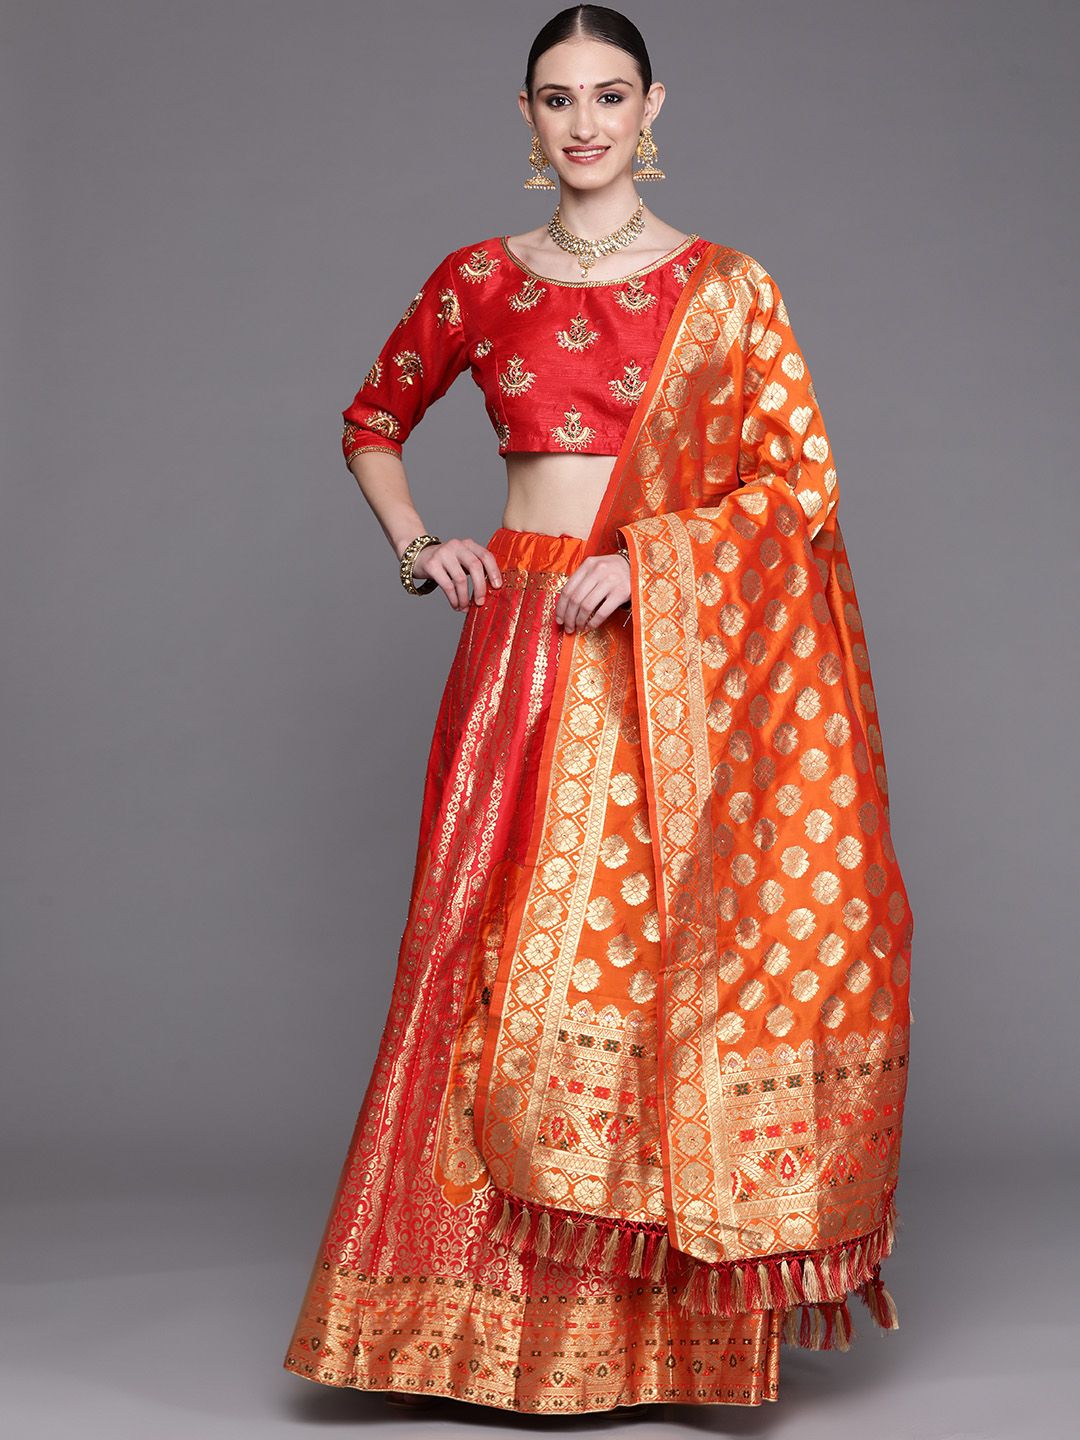 Chhabra 555 Red & Orange Beads and Stones Kalamkari Semi-Stitched Lehenga & Unstitched Blouse With Dupatta Price in India